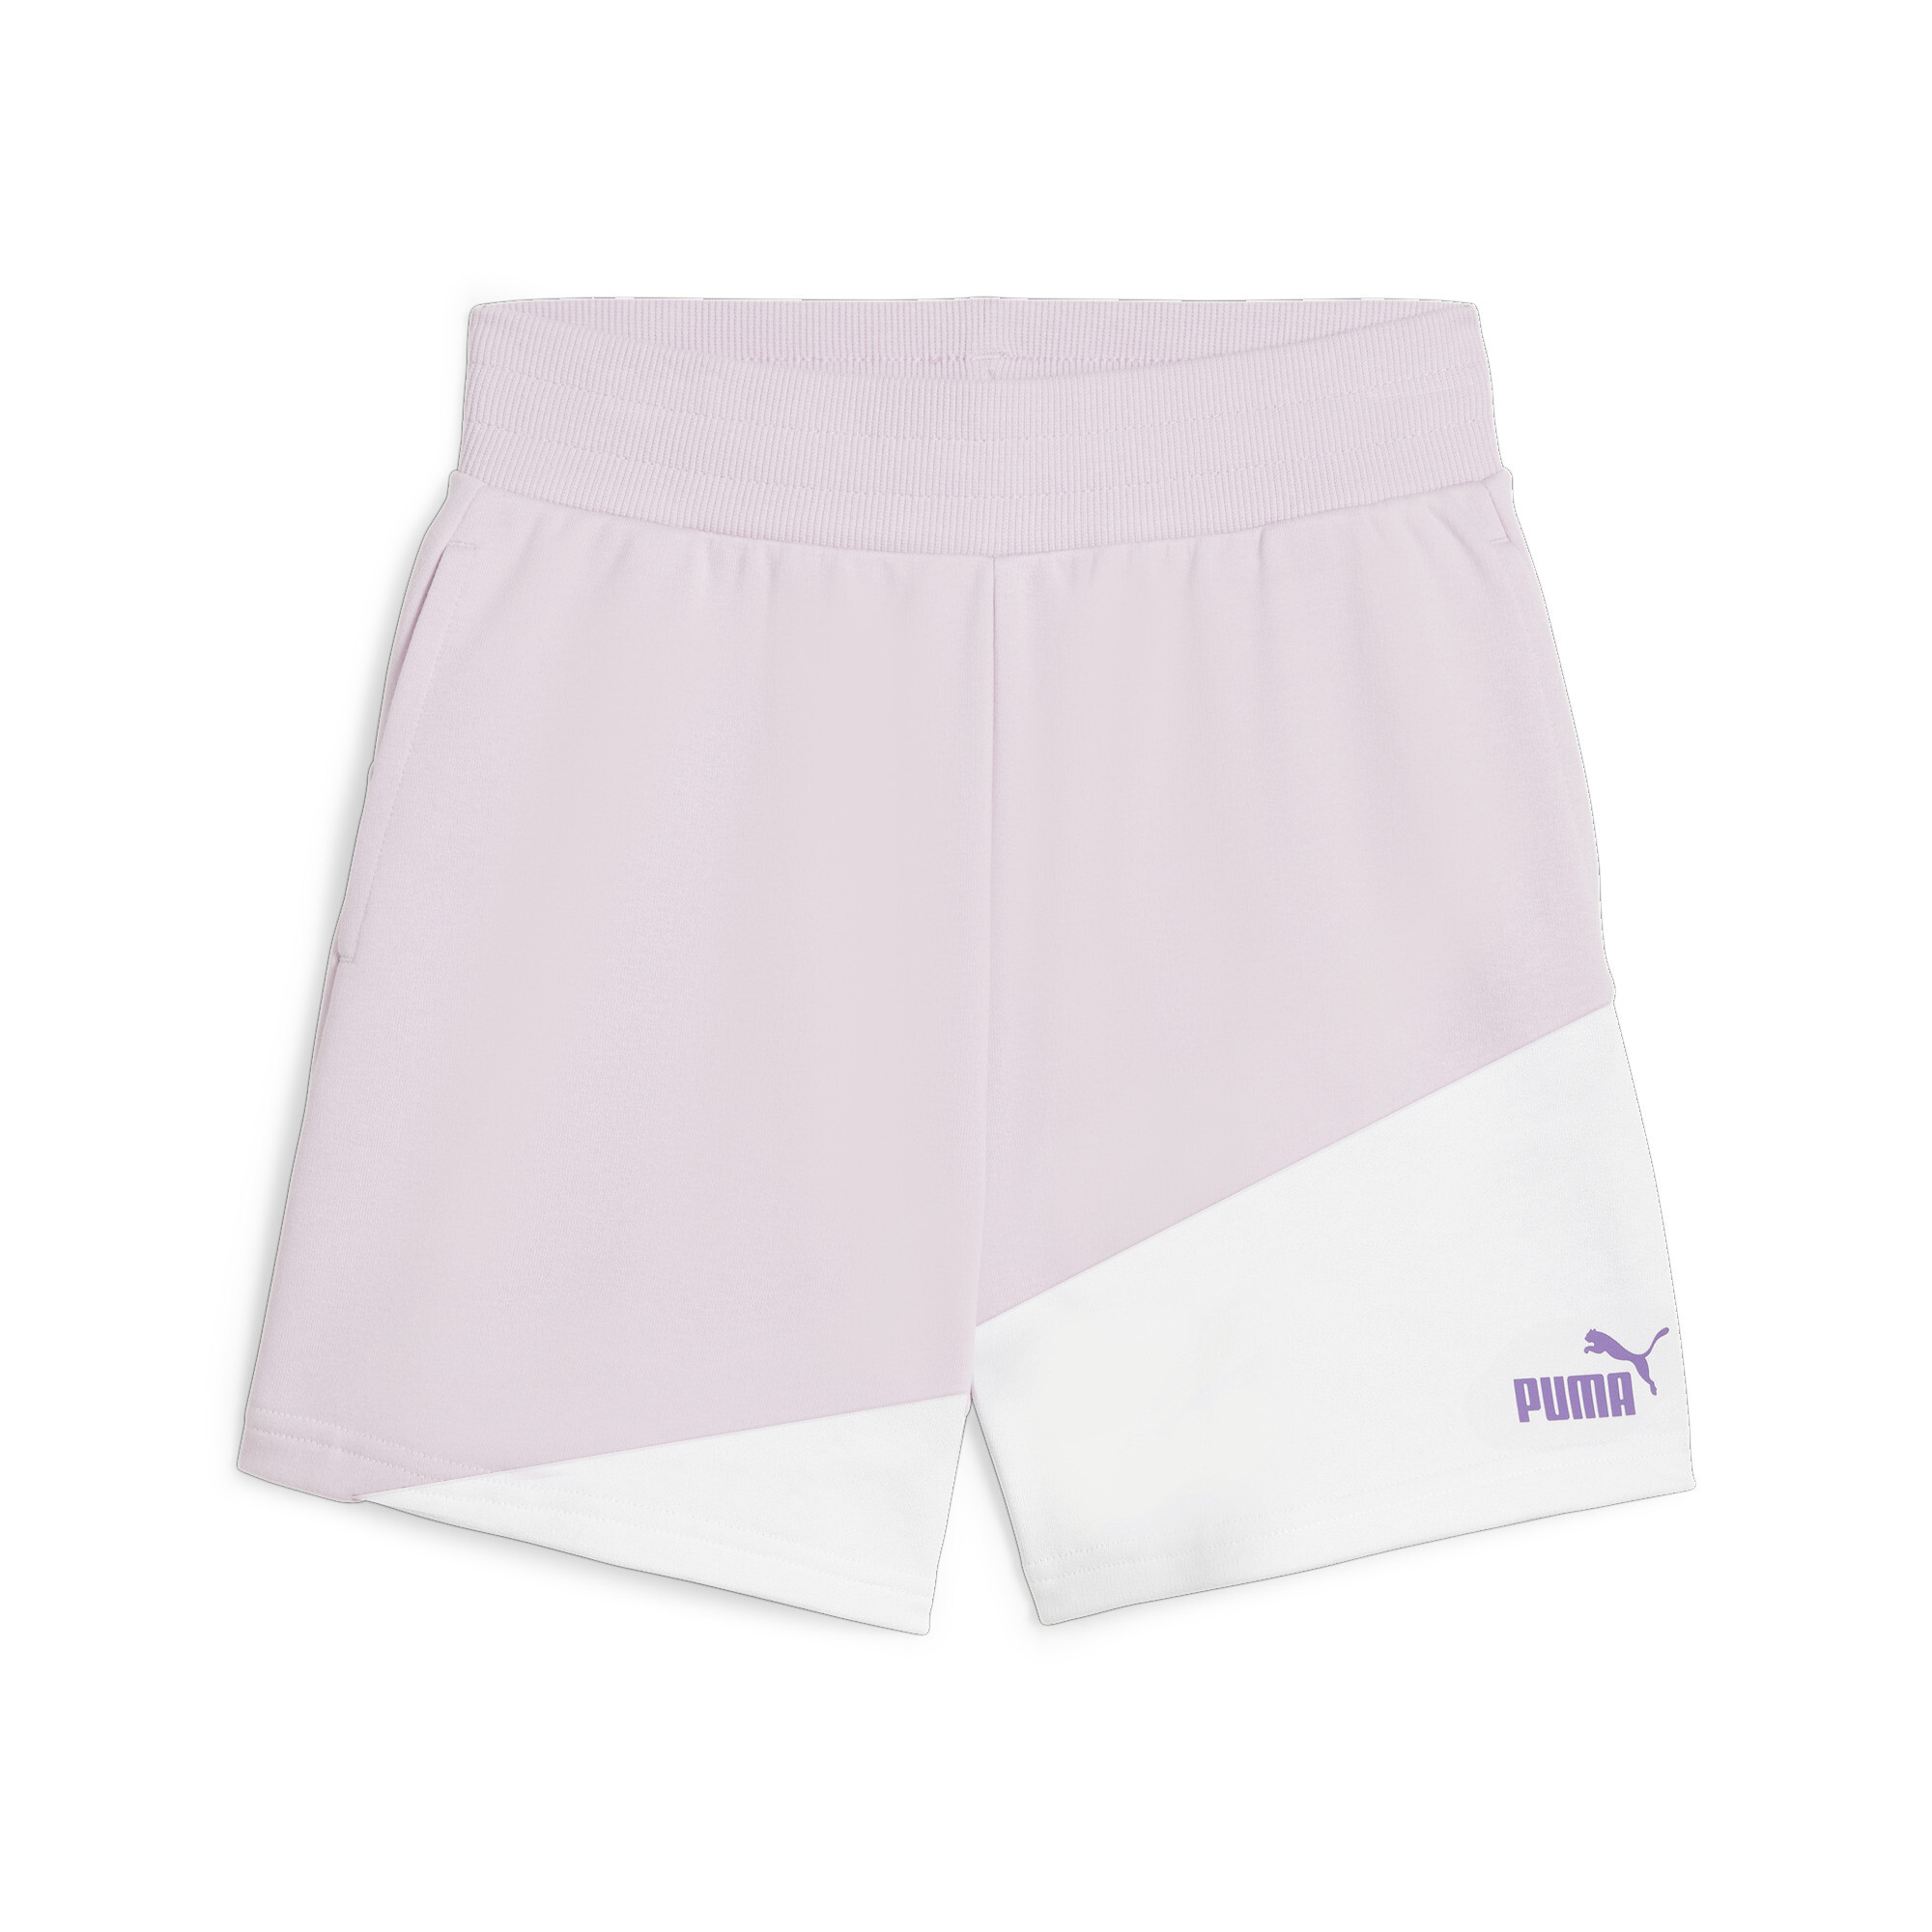 Women's PUMA POWER Shorts In 90 - Purple, Size Medium